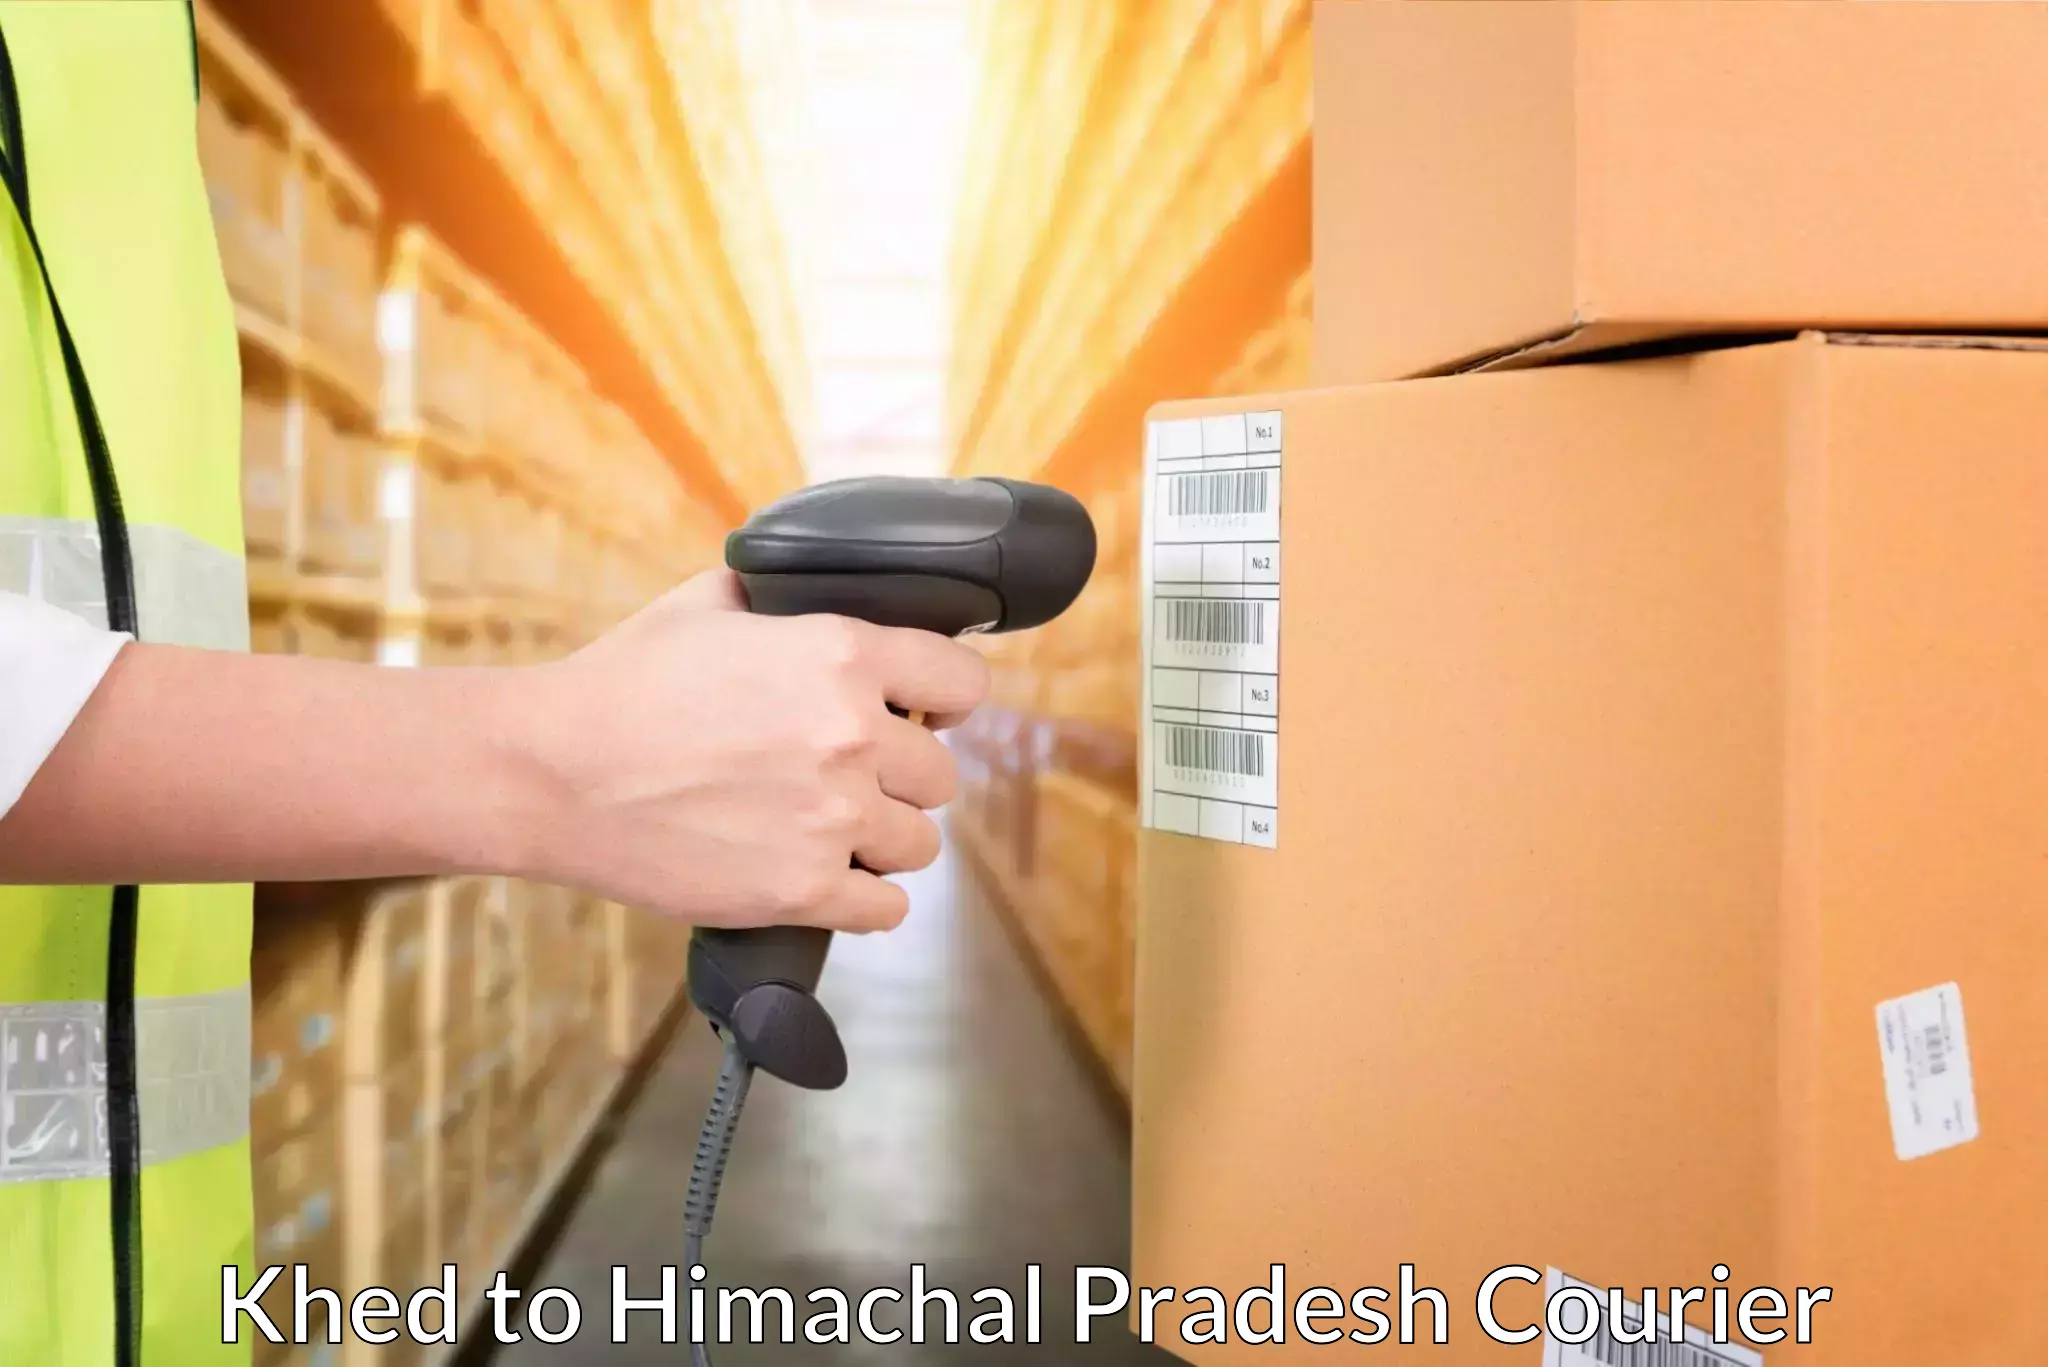 Courier service comparison Khed to Himachal Pradesh